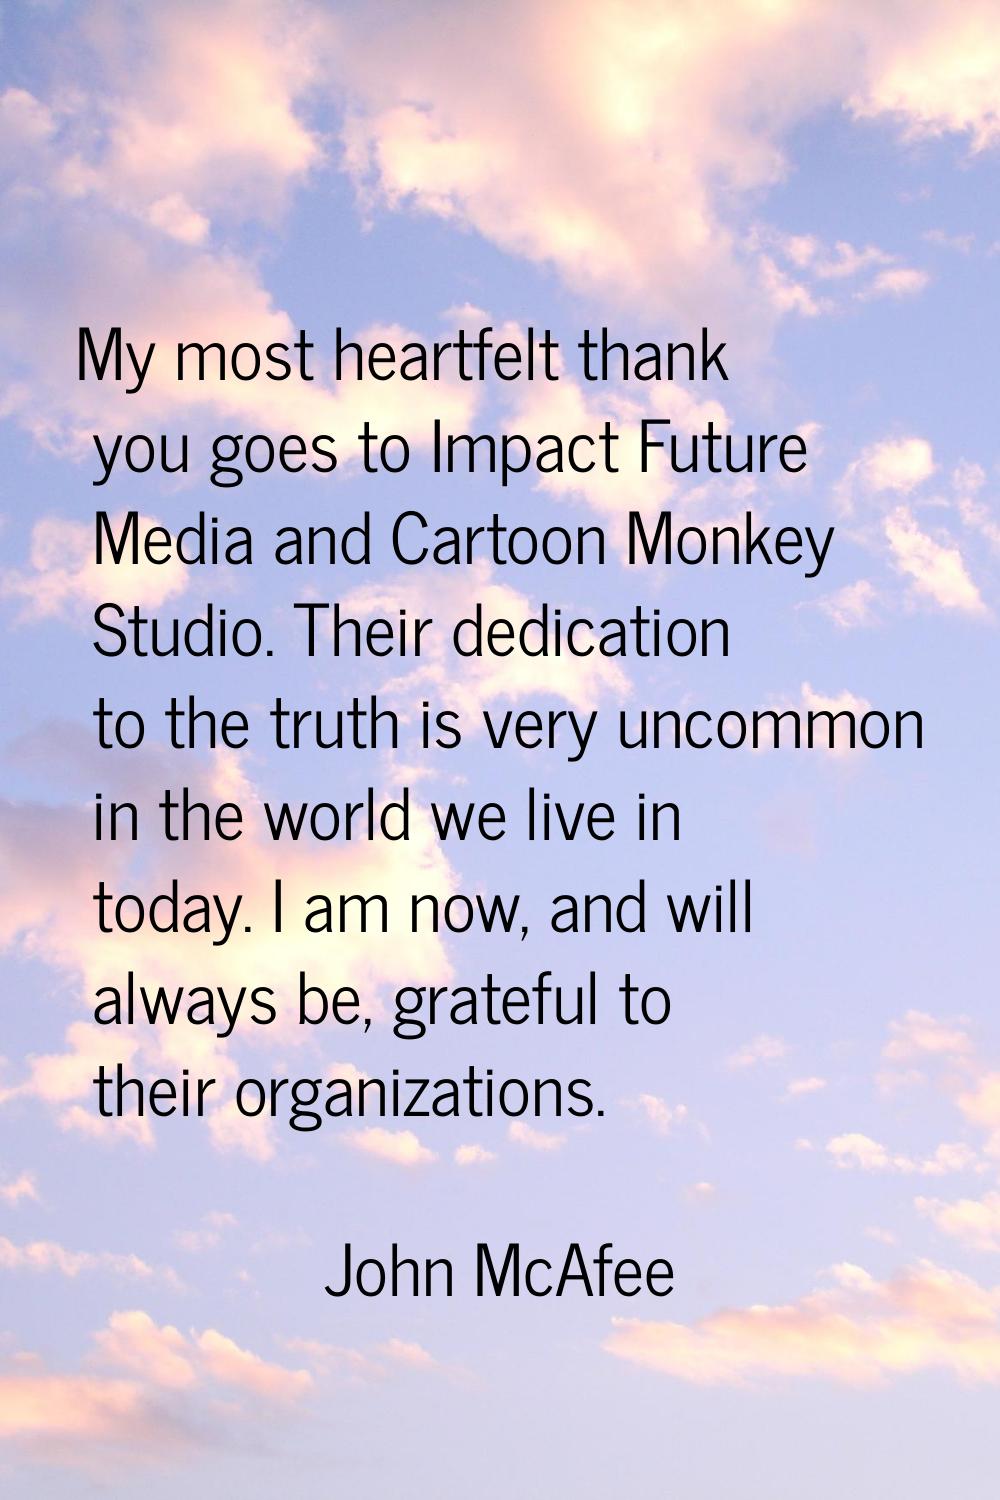 My most heartfelt thank you goes to Impact Future Media and Cartoon Monkey Studio. Their dedication